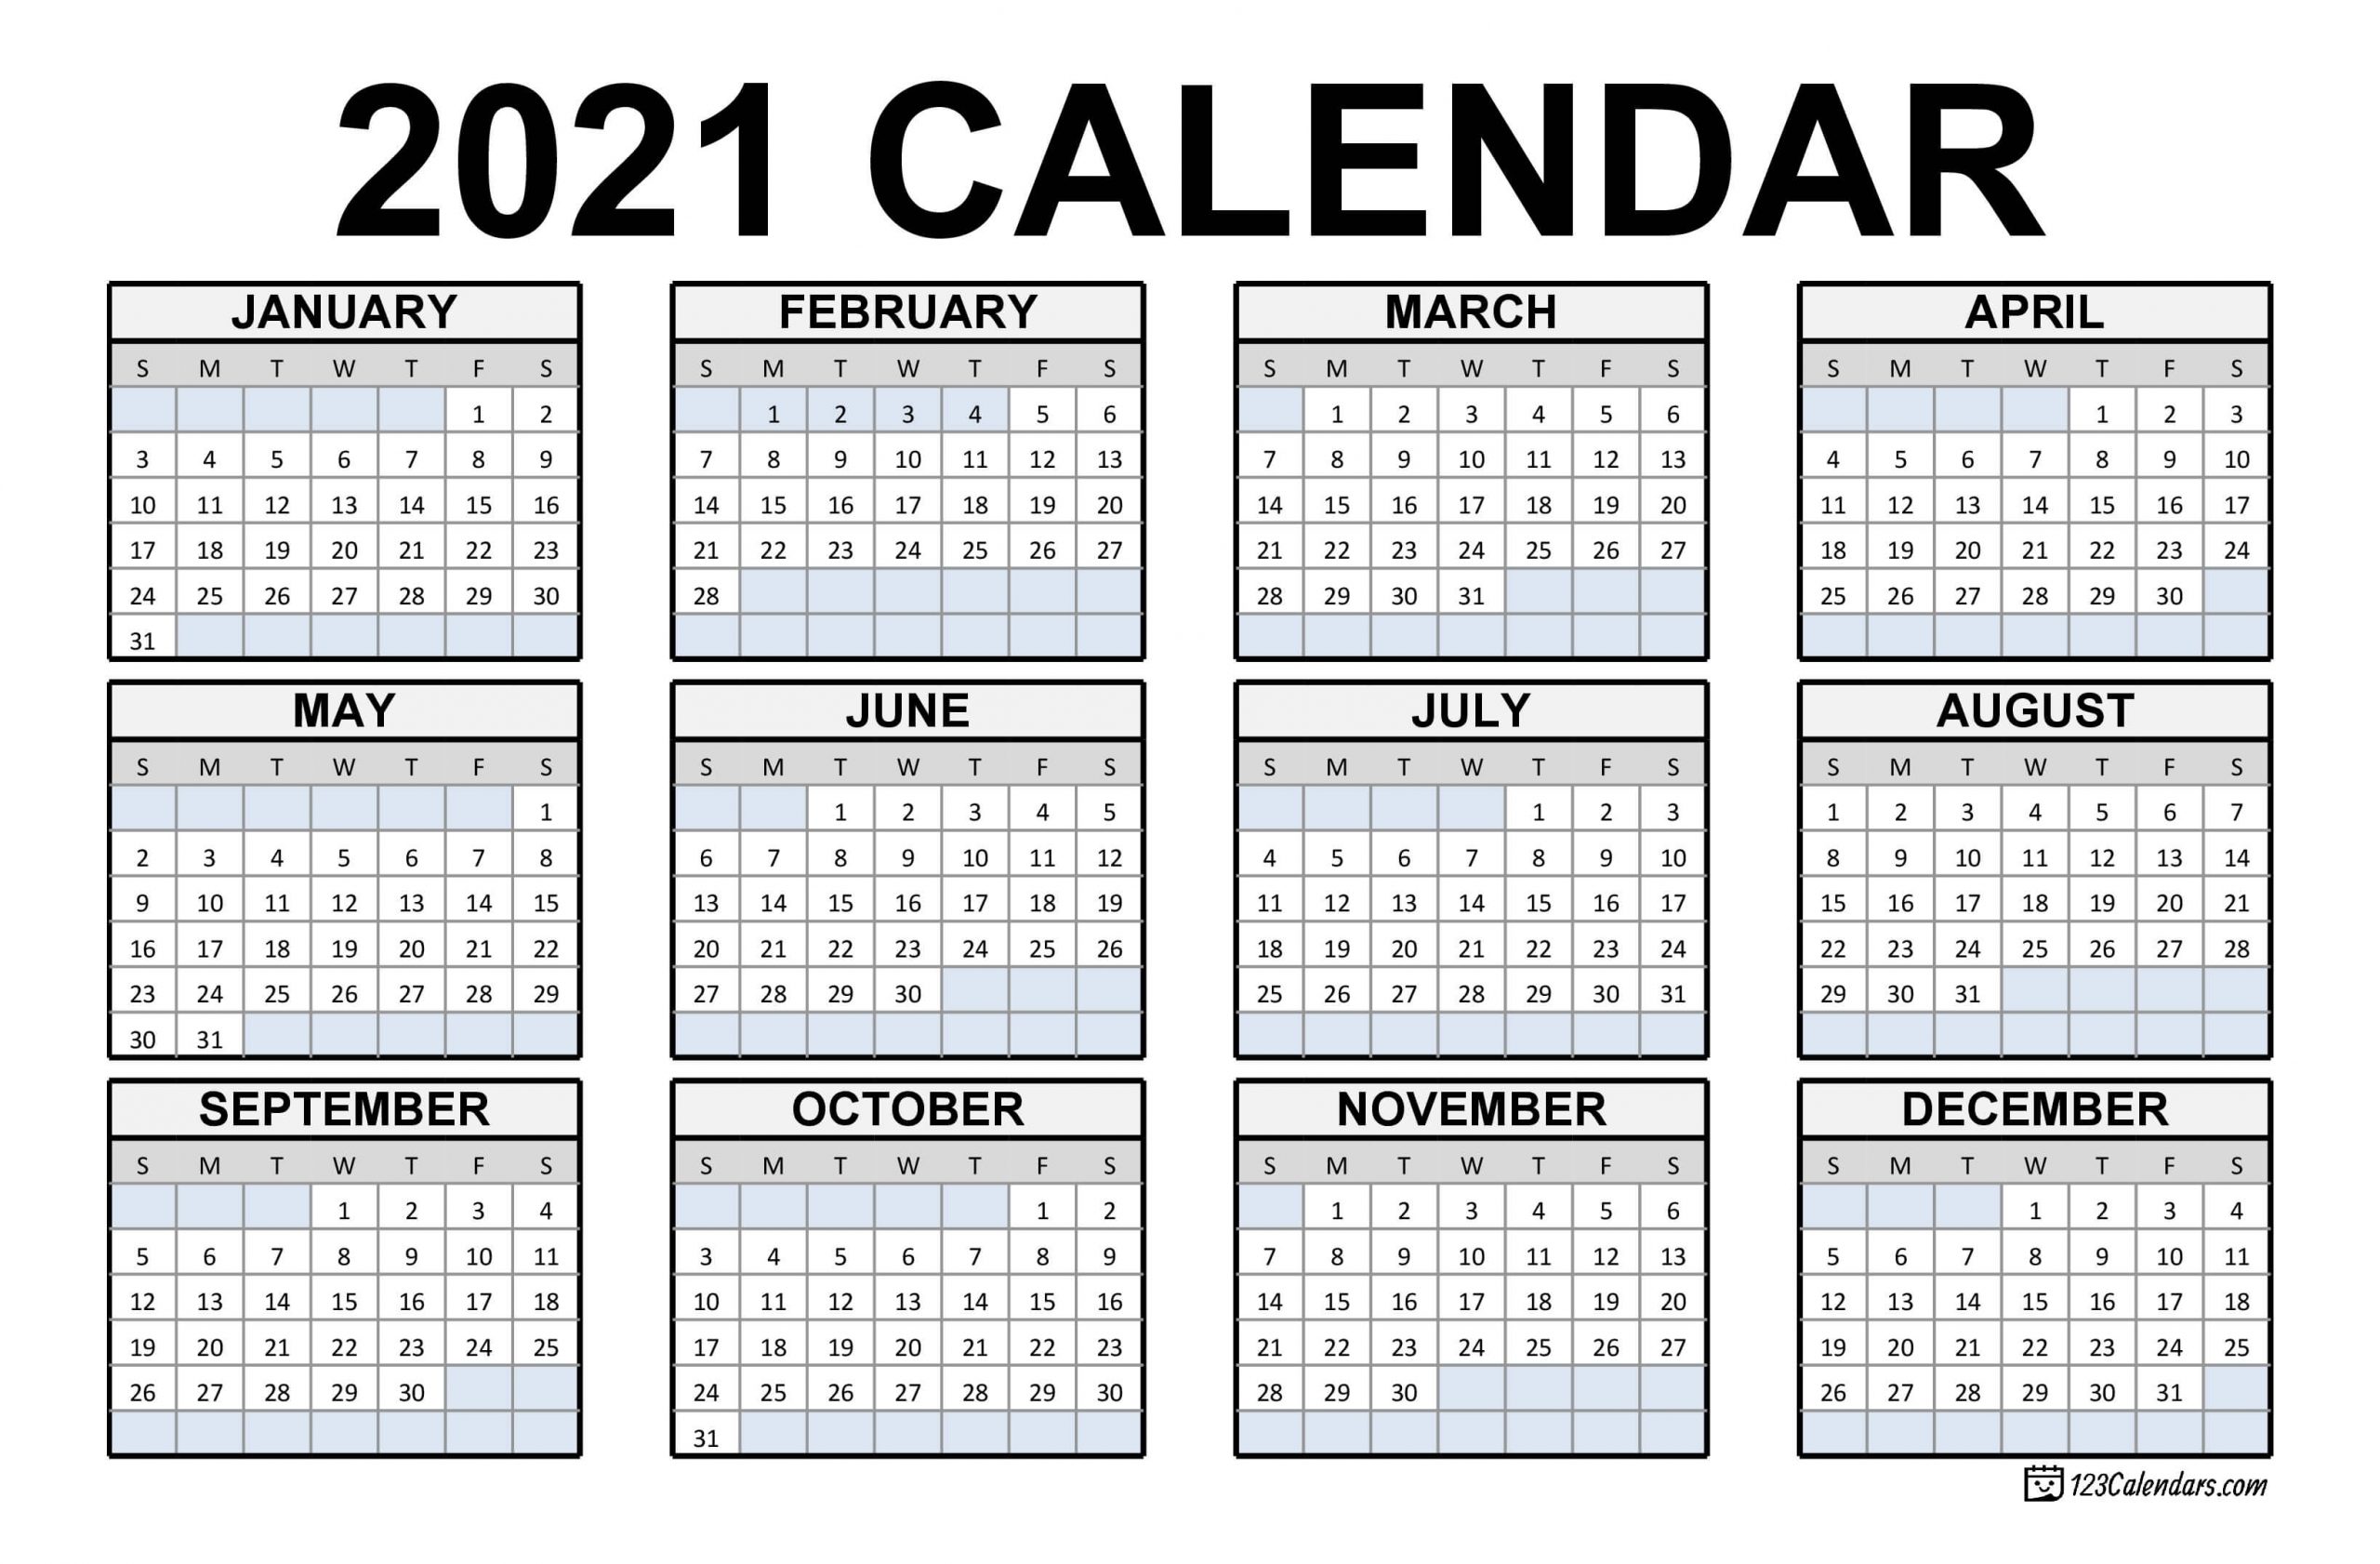 2021 Printable Calendar | 123Calendars